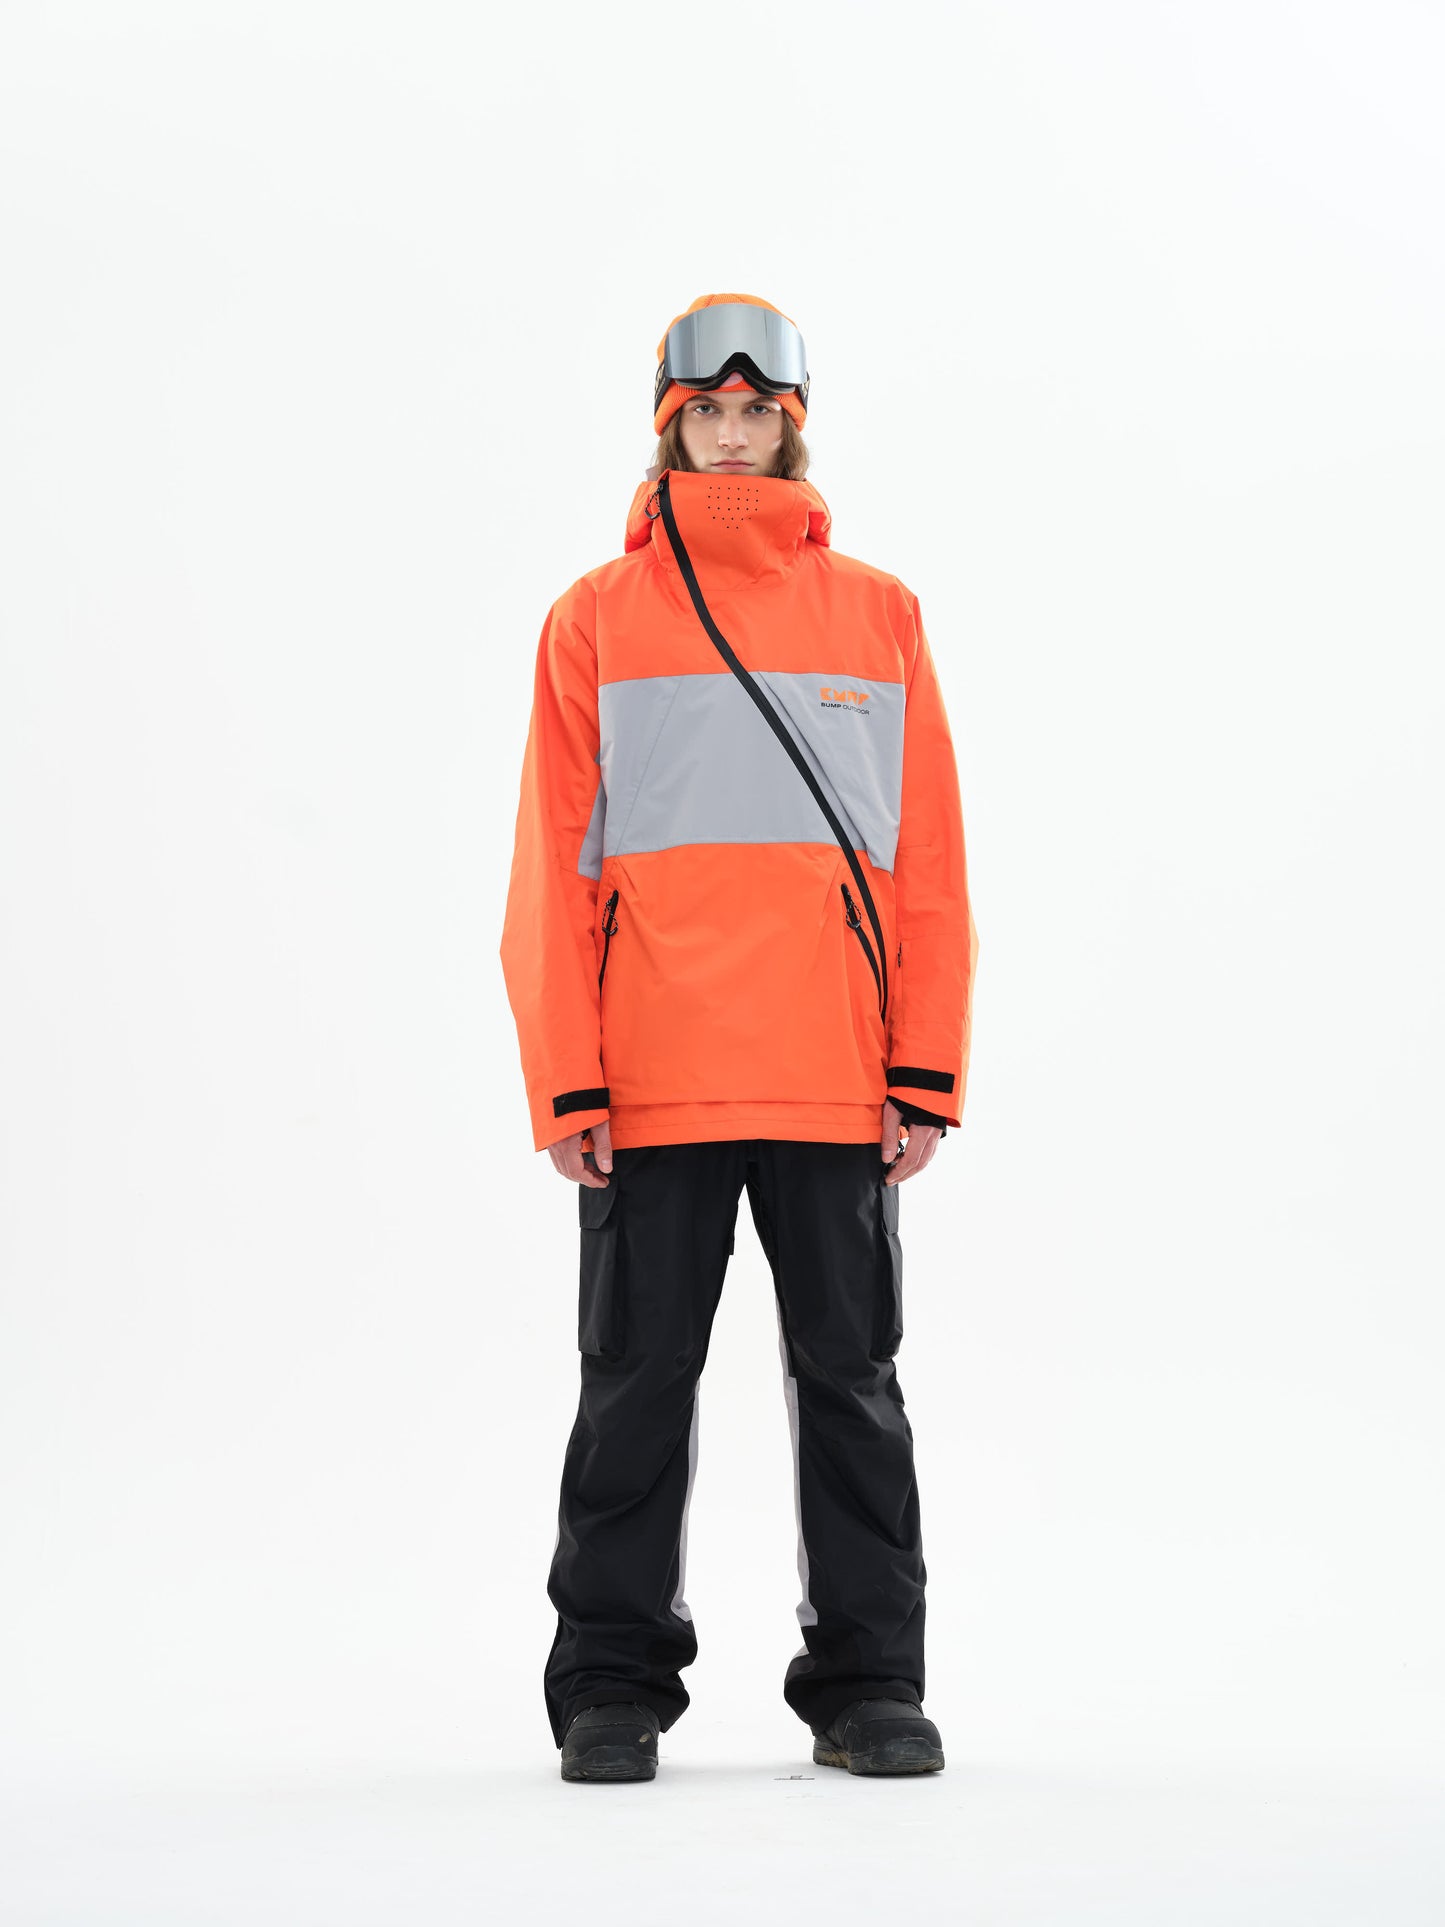 Slash 23 Ski/Snowboarding Jacket Men Orange Gray